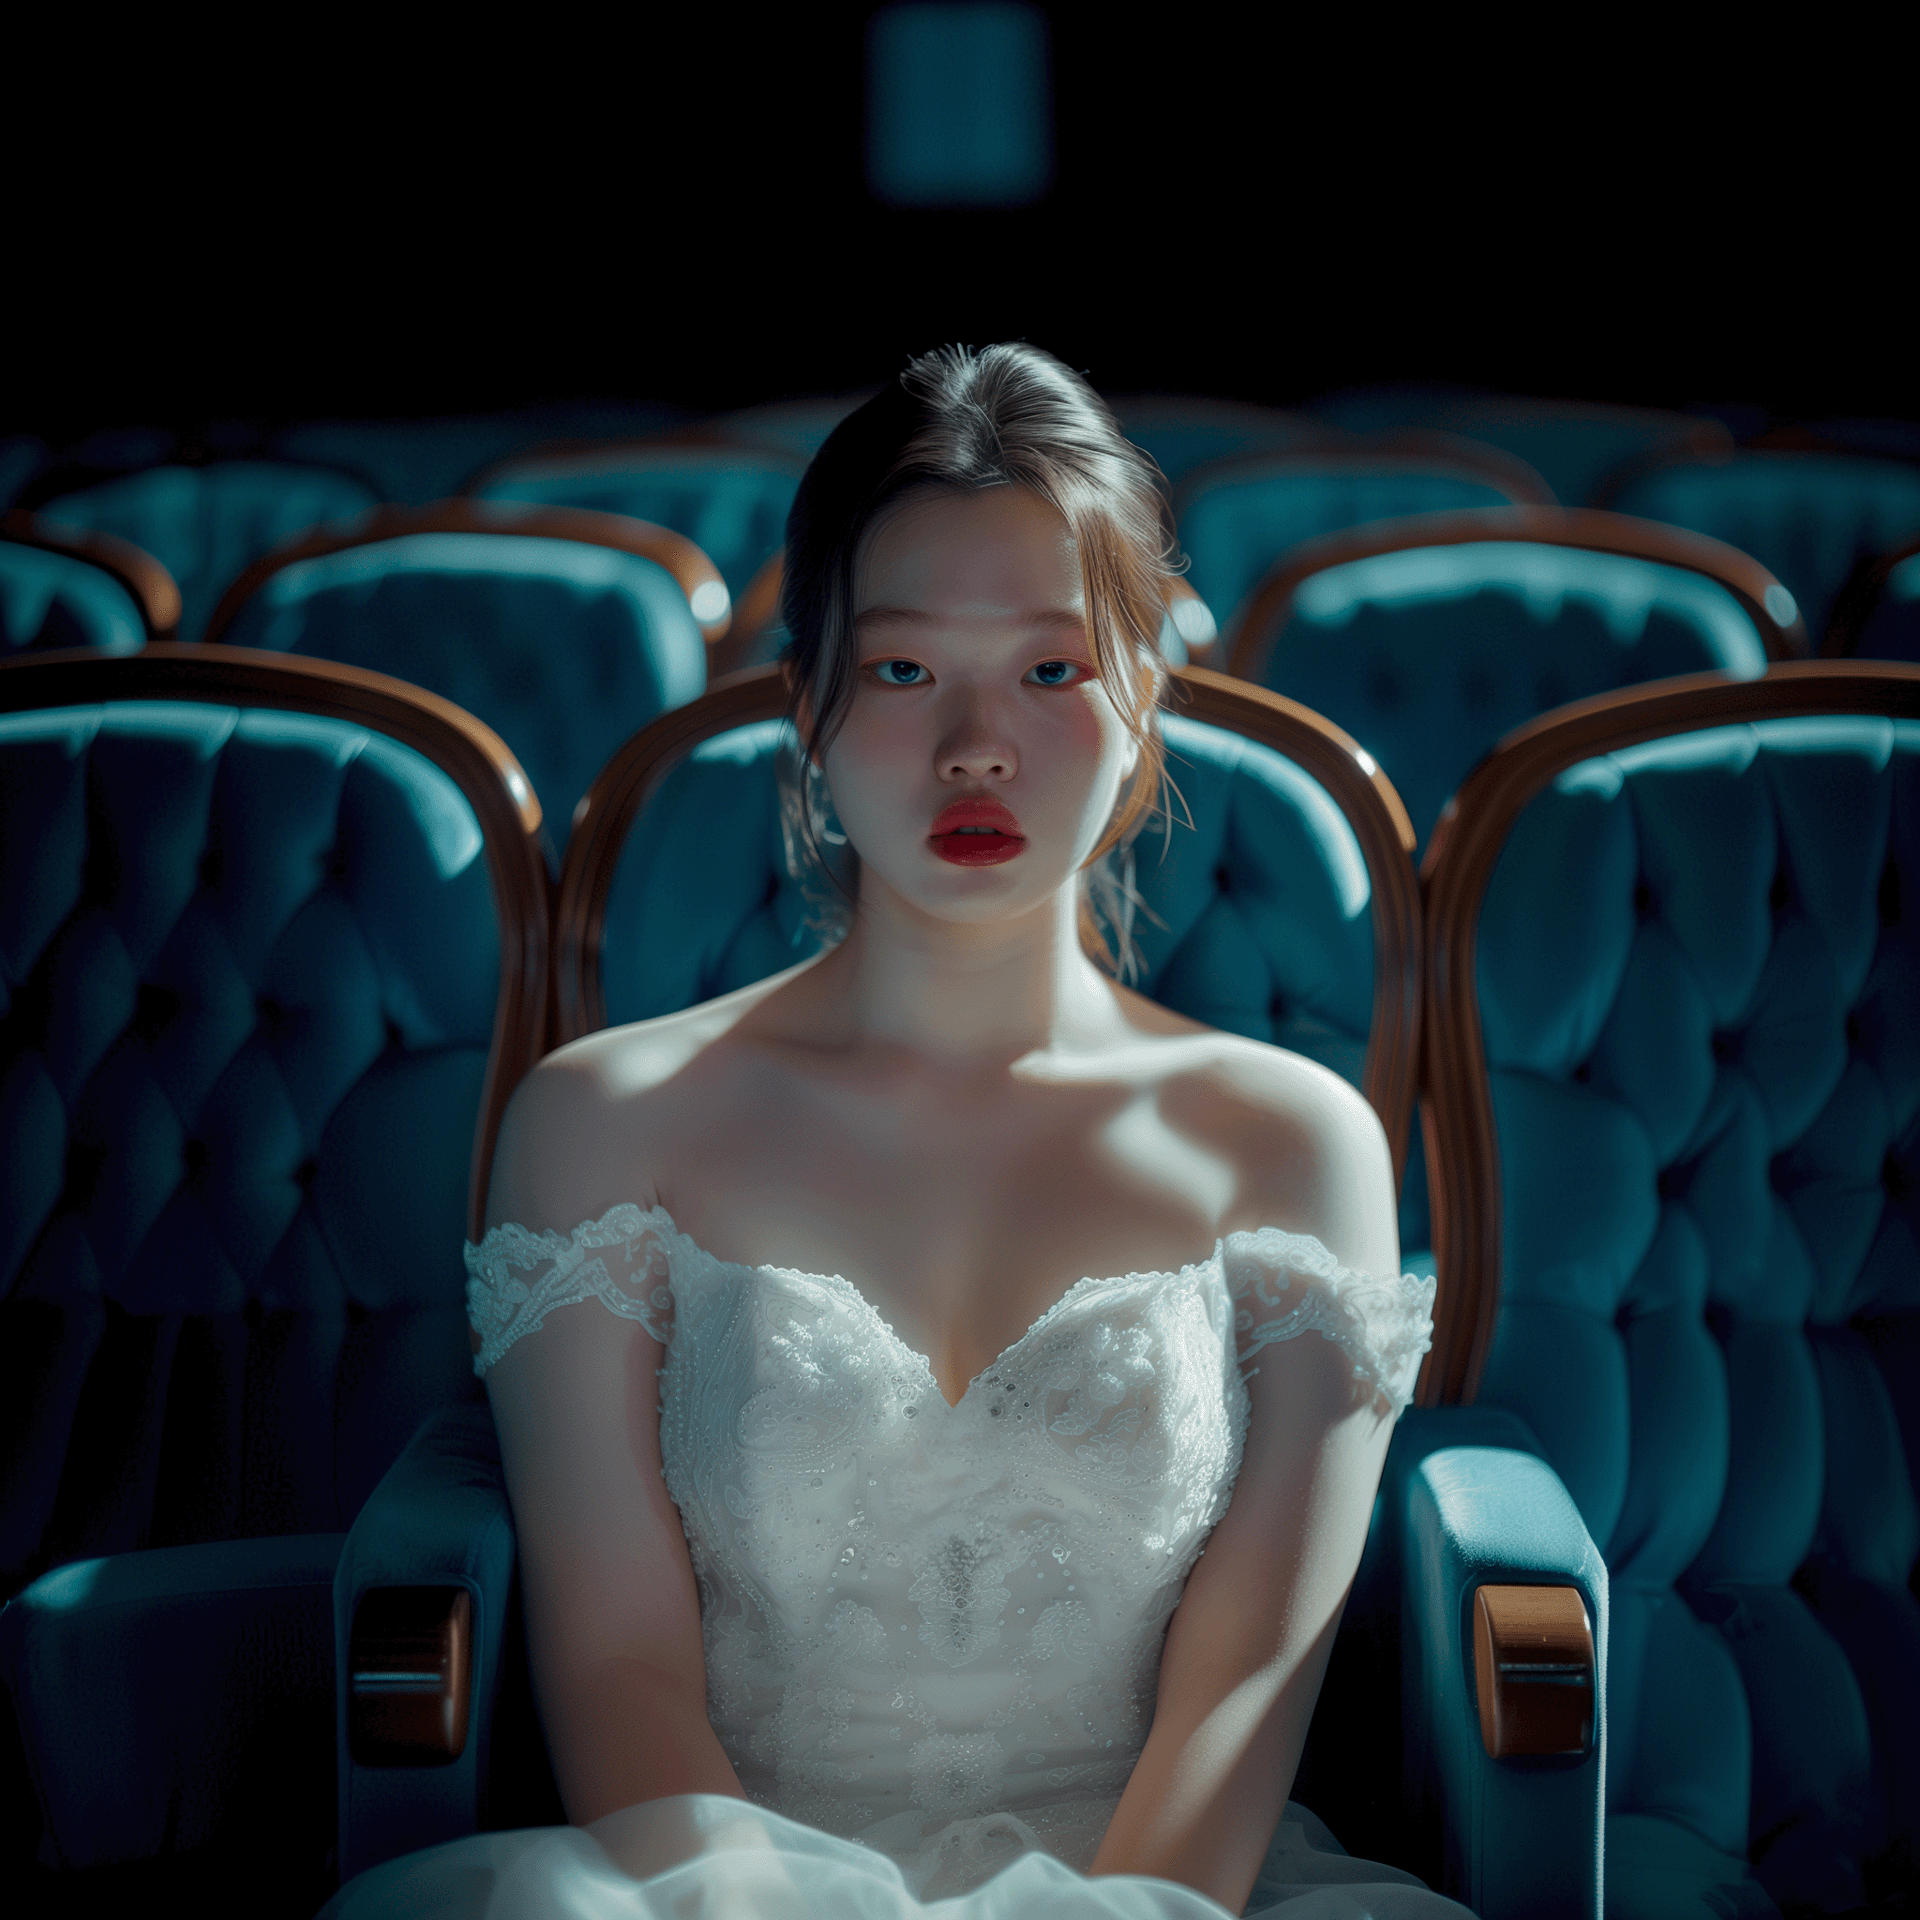 A bride sitting in the empty cinema